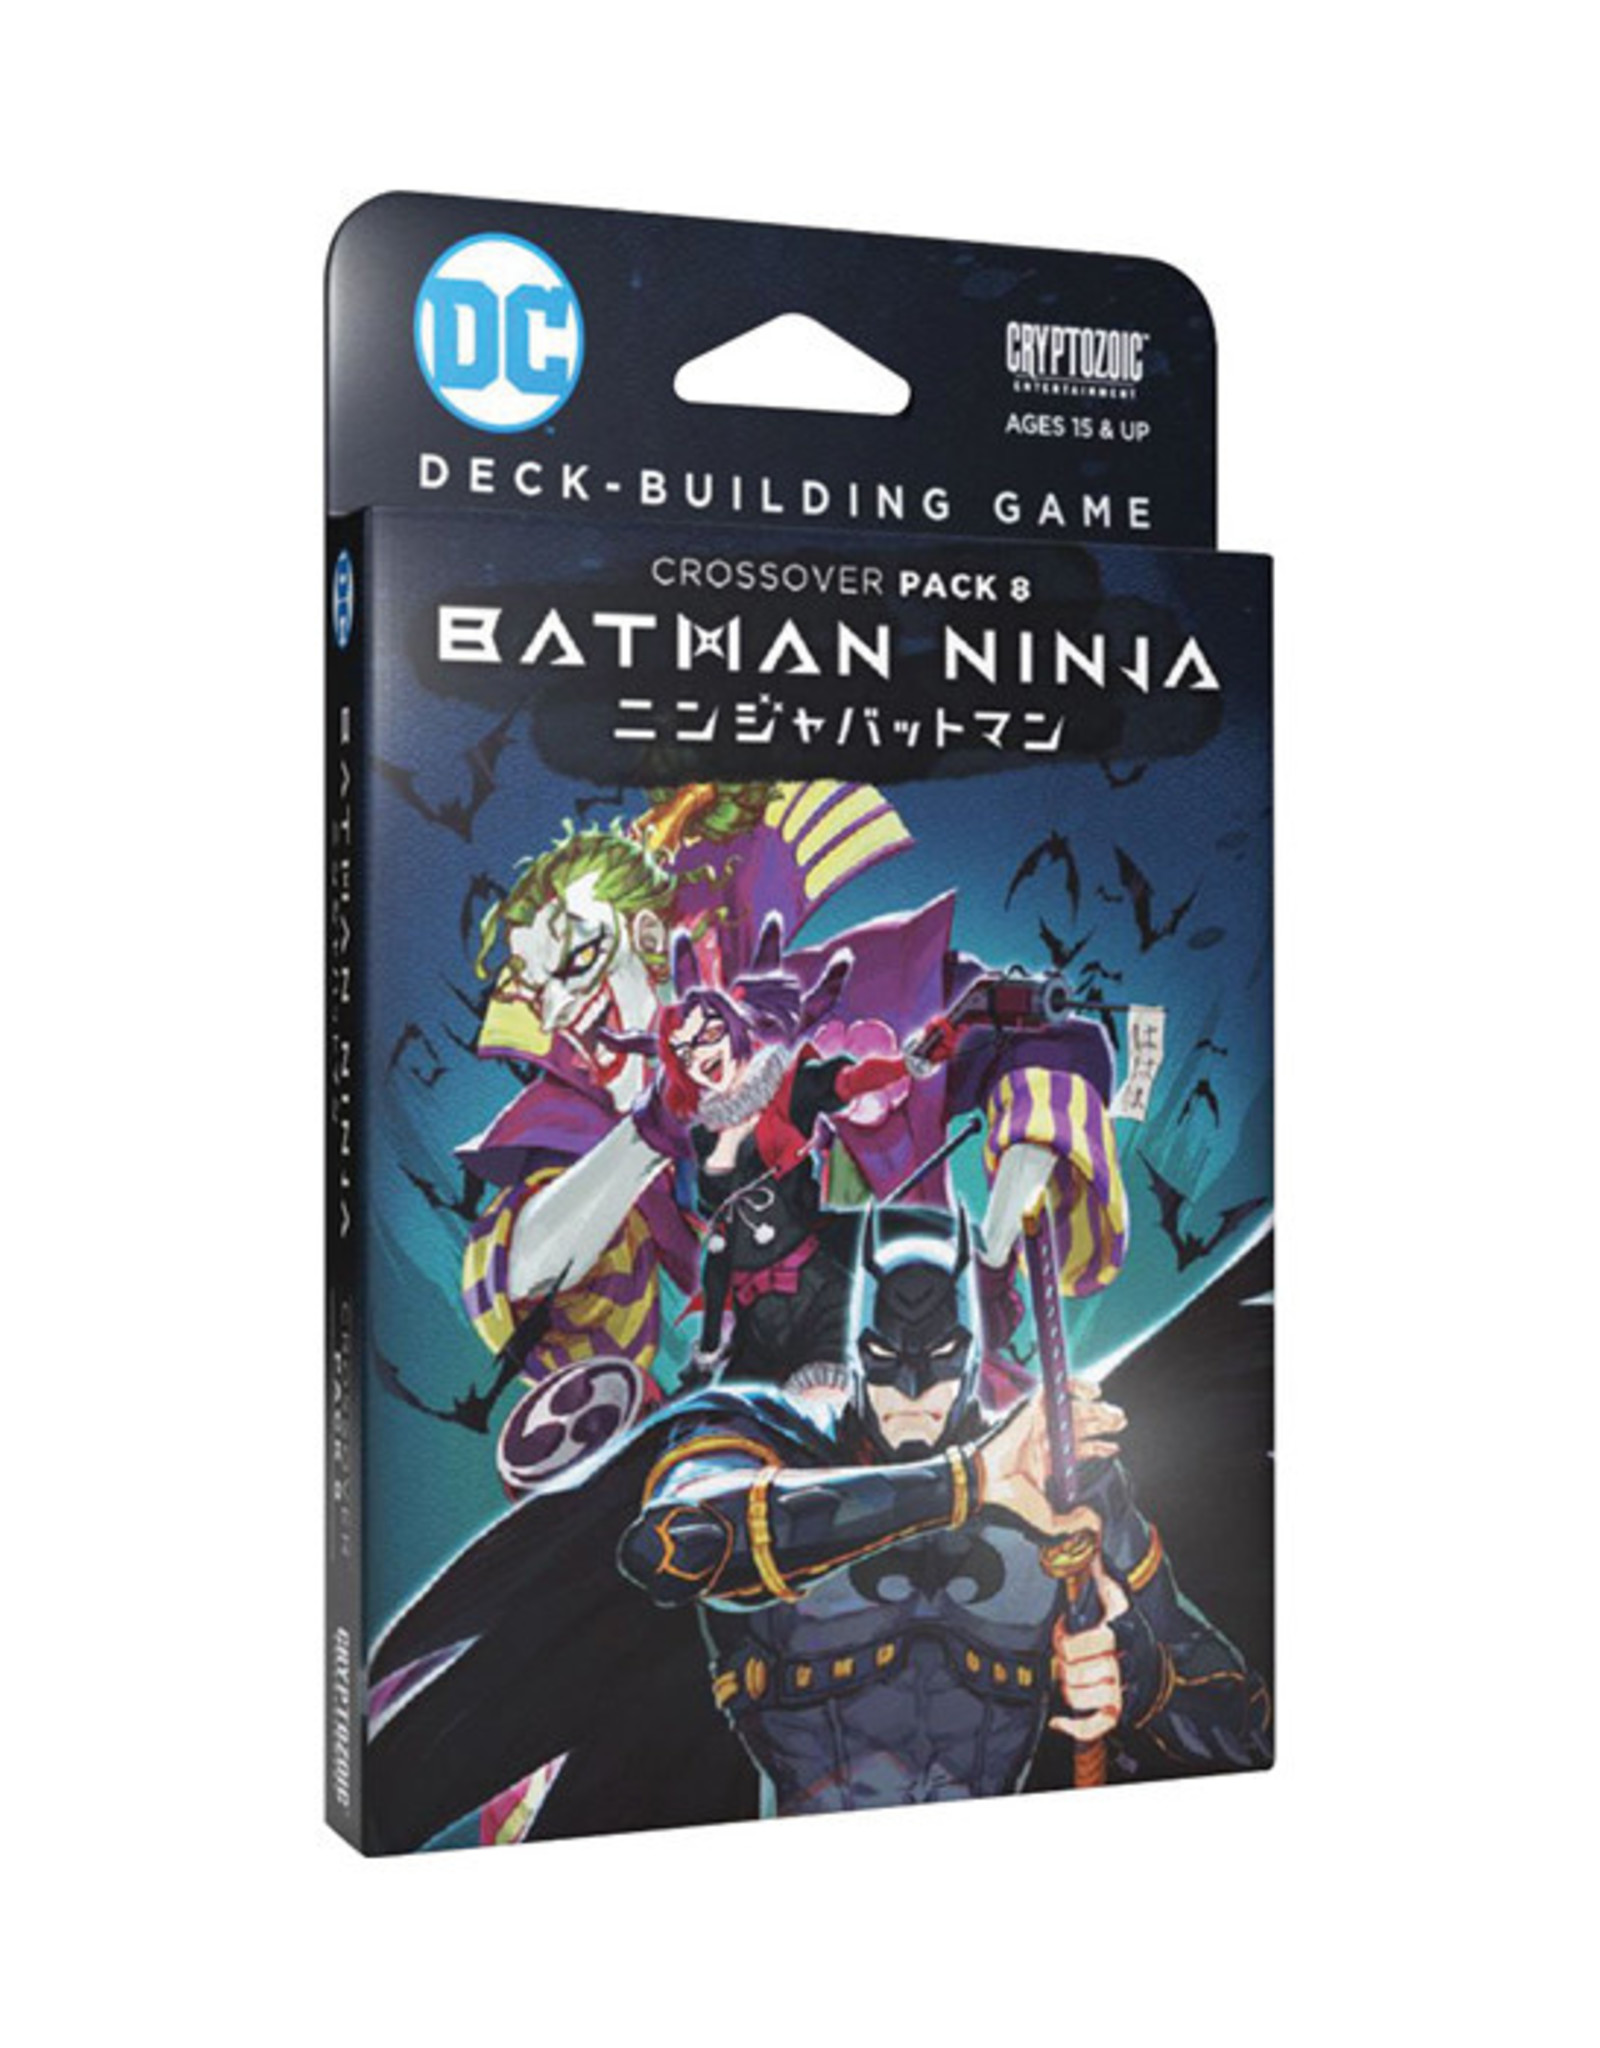 DC Deck Building Game: Crossover Pack 8 - Batman Ninja